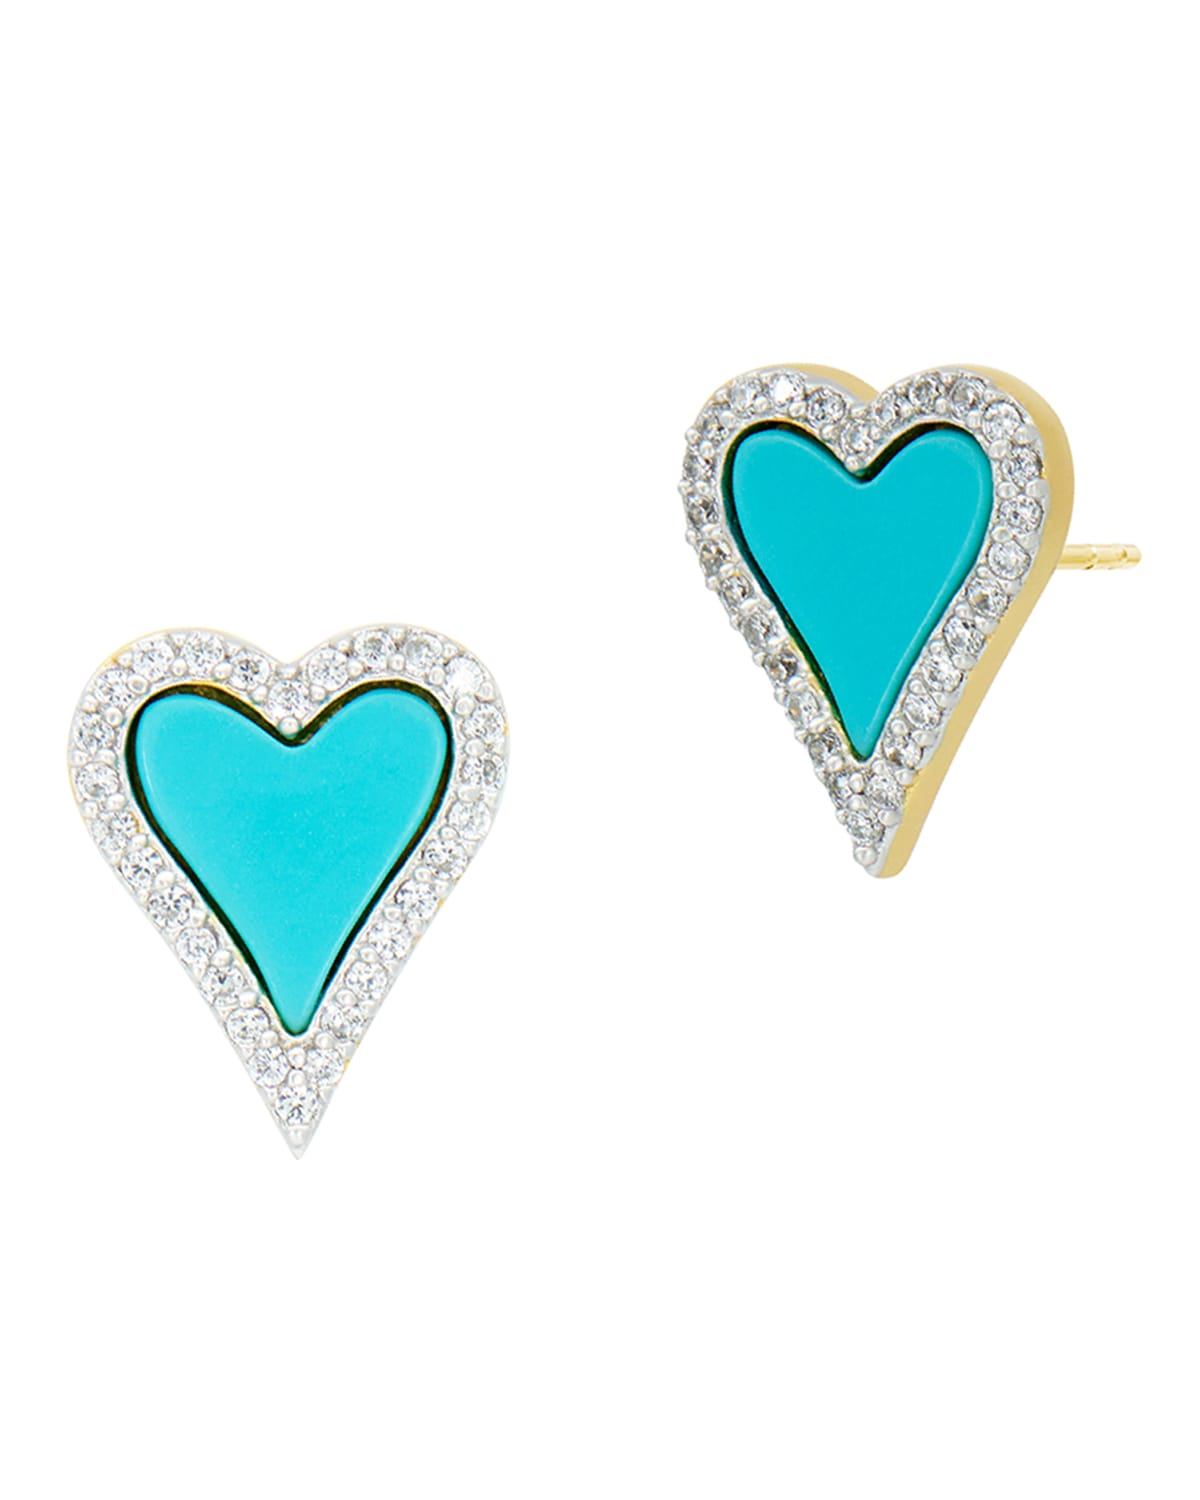 Freida Rothman Turquoise Heart Stud Earrings